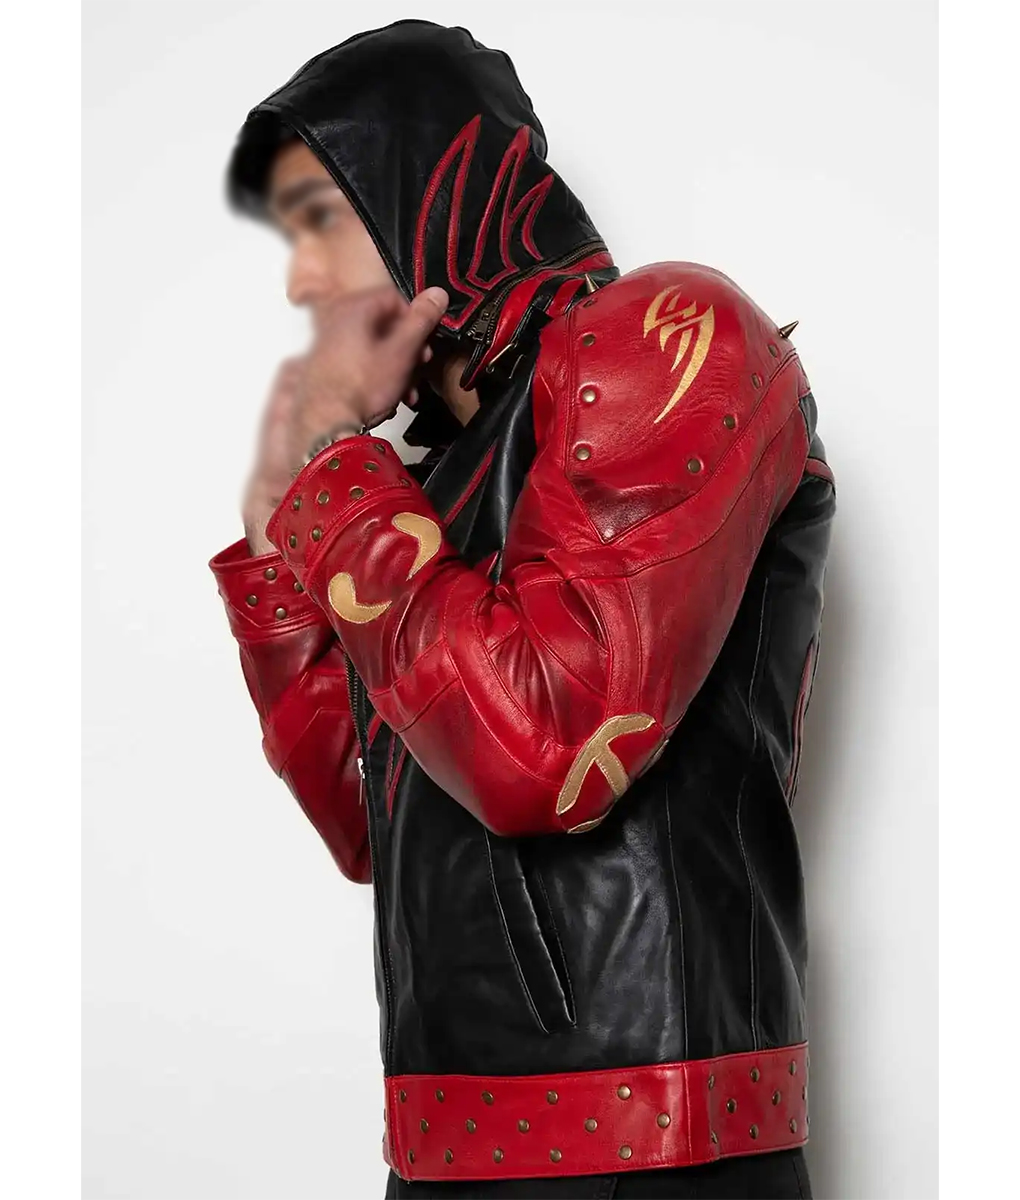 Supreme Tekken 7 Jacket Jin Kazama Red Leather Jacket